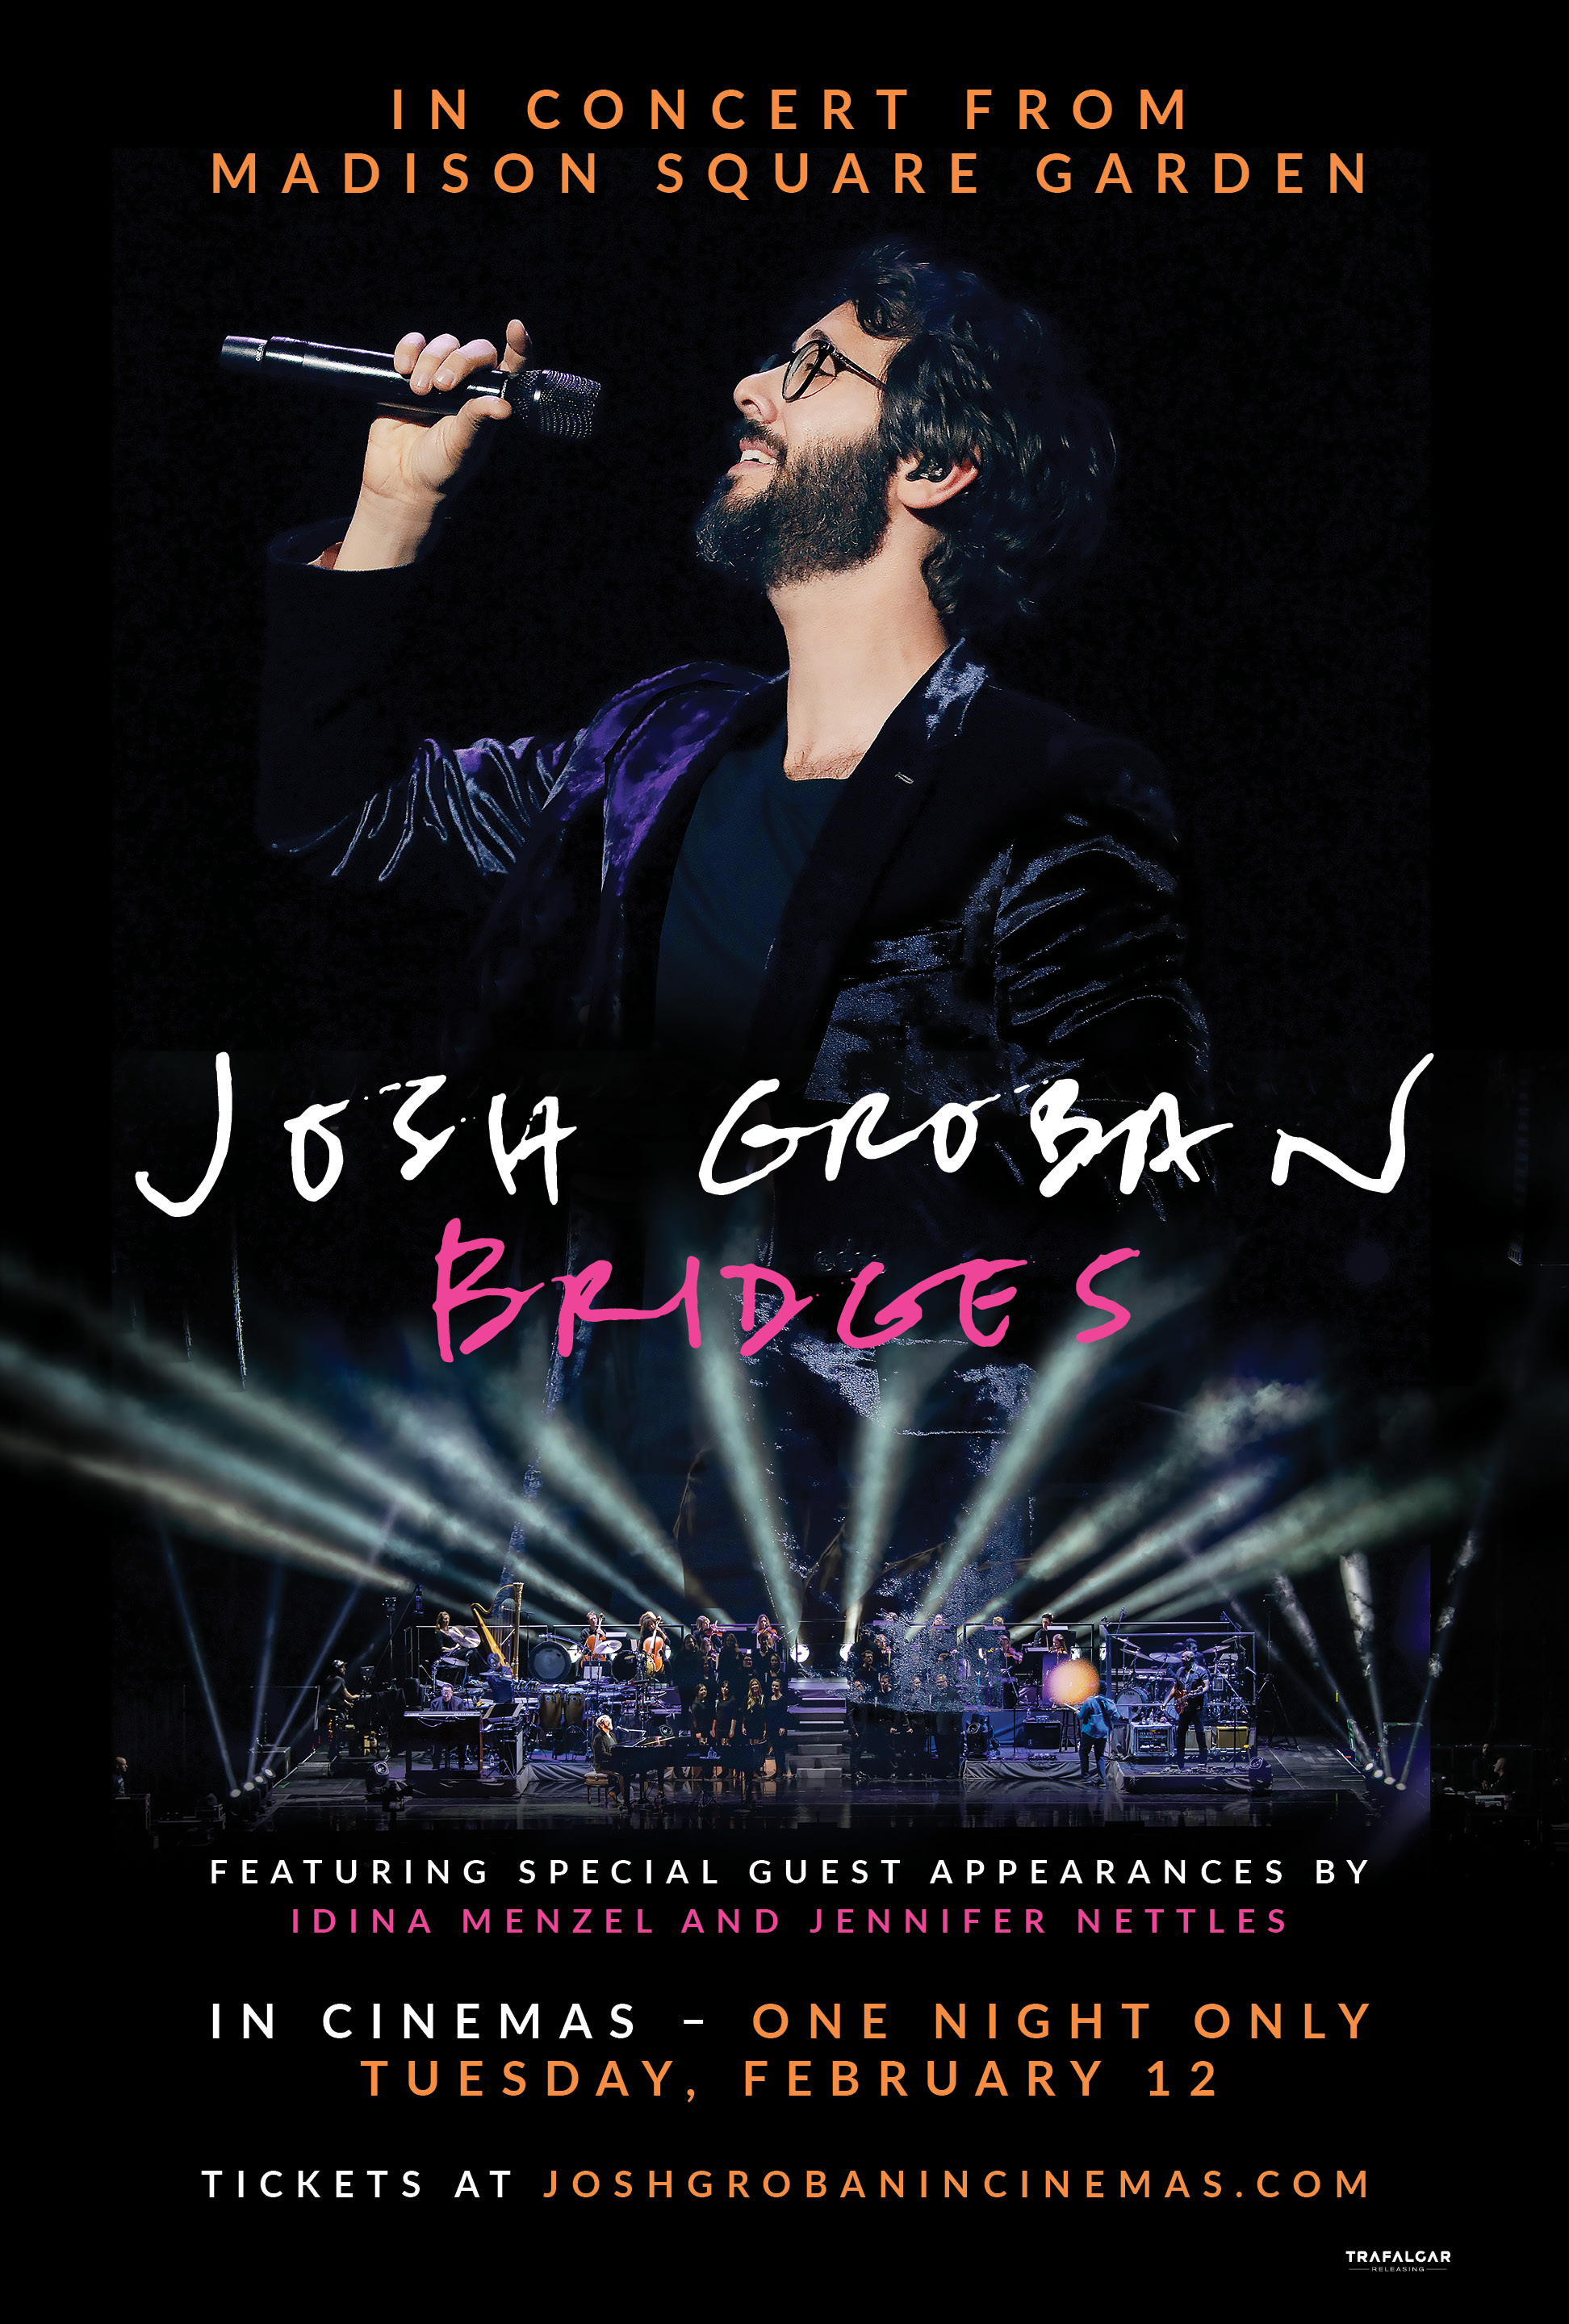 Josh Groban Bridges Live from Madison Square Garden make-up screenings